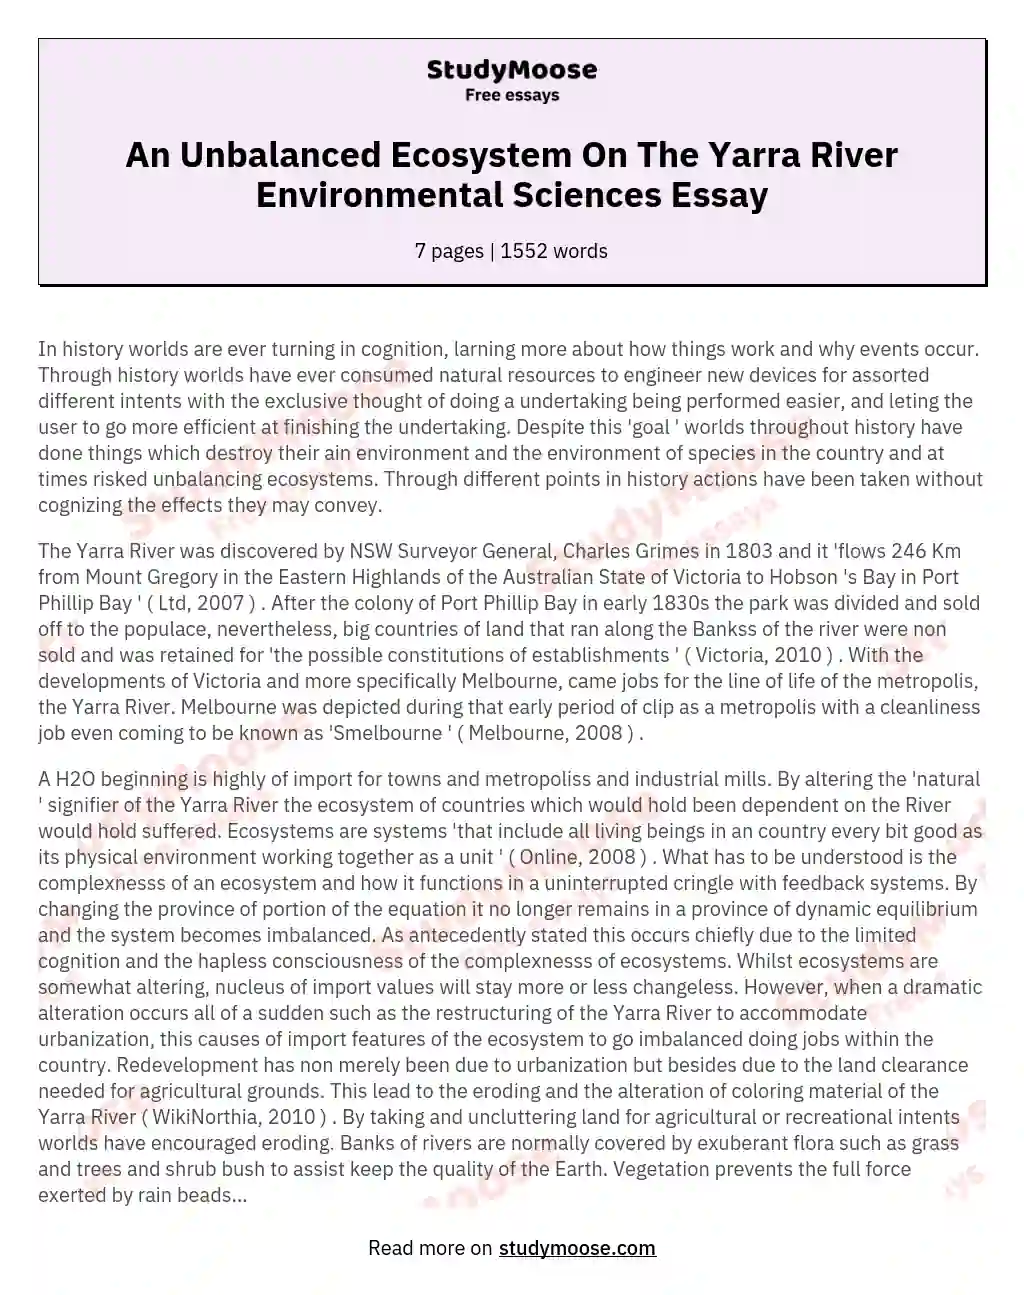 An Unbalanced Ecosystem On The Yarra River Environmental Sciences Essay